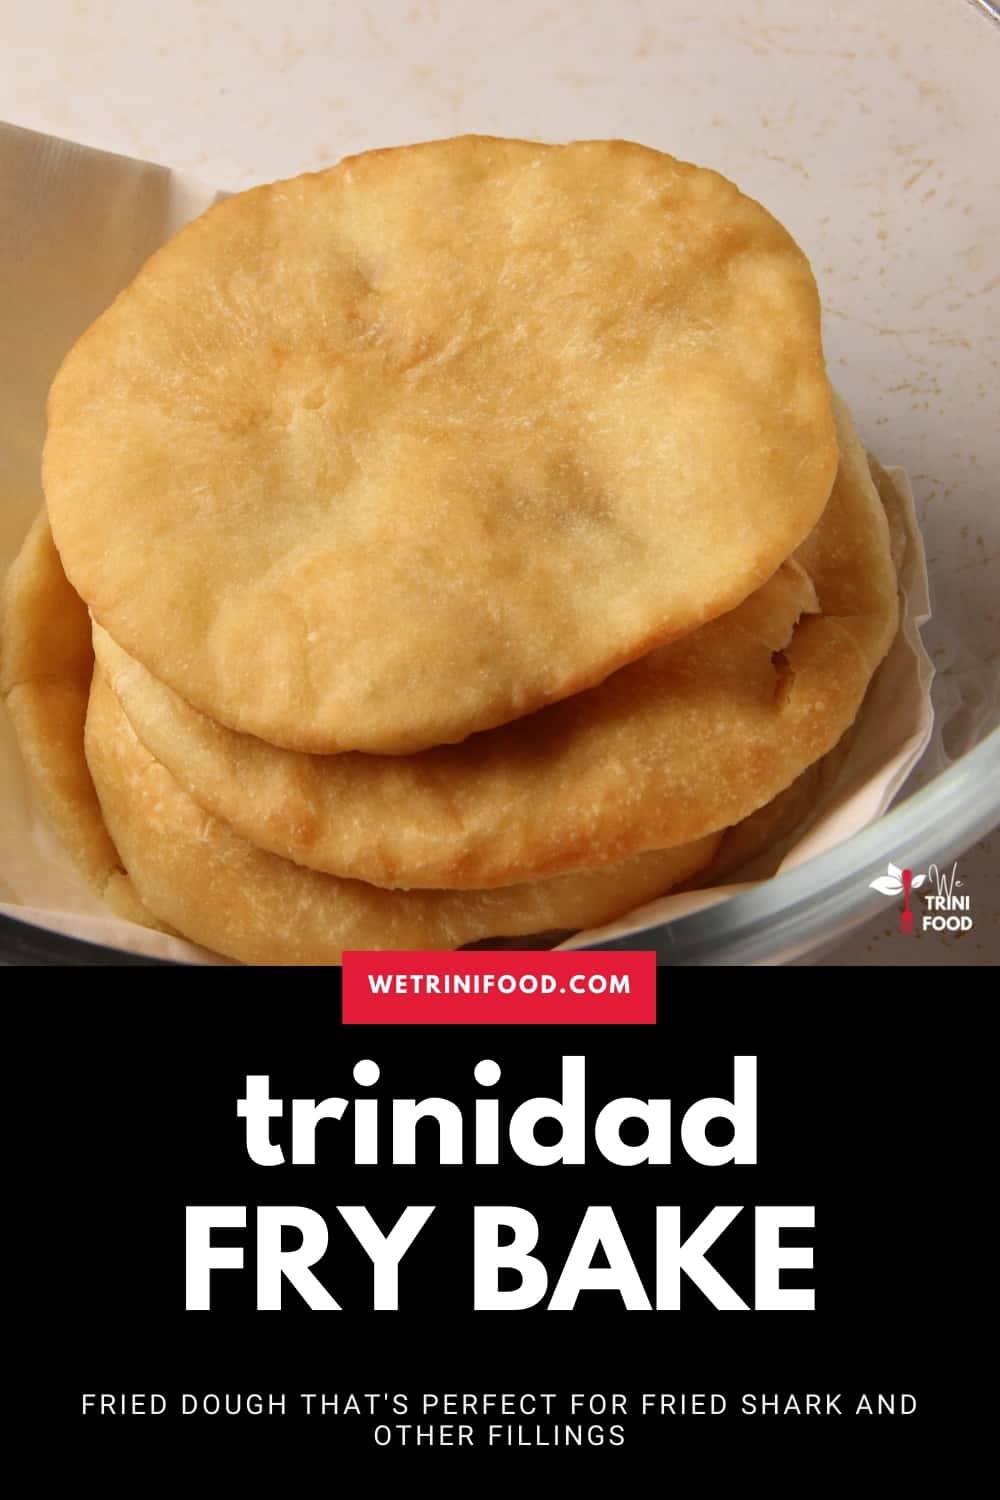 Trinidad fry bake recipe for pinterest